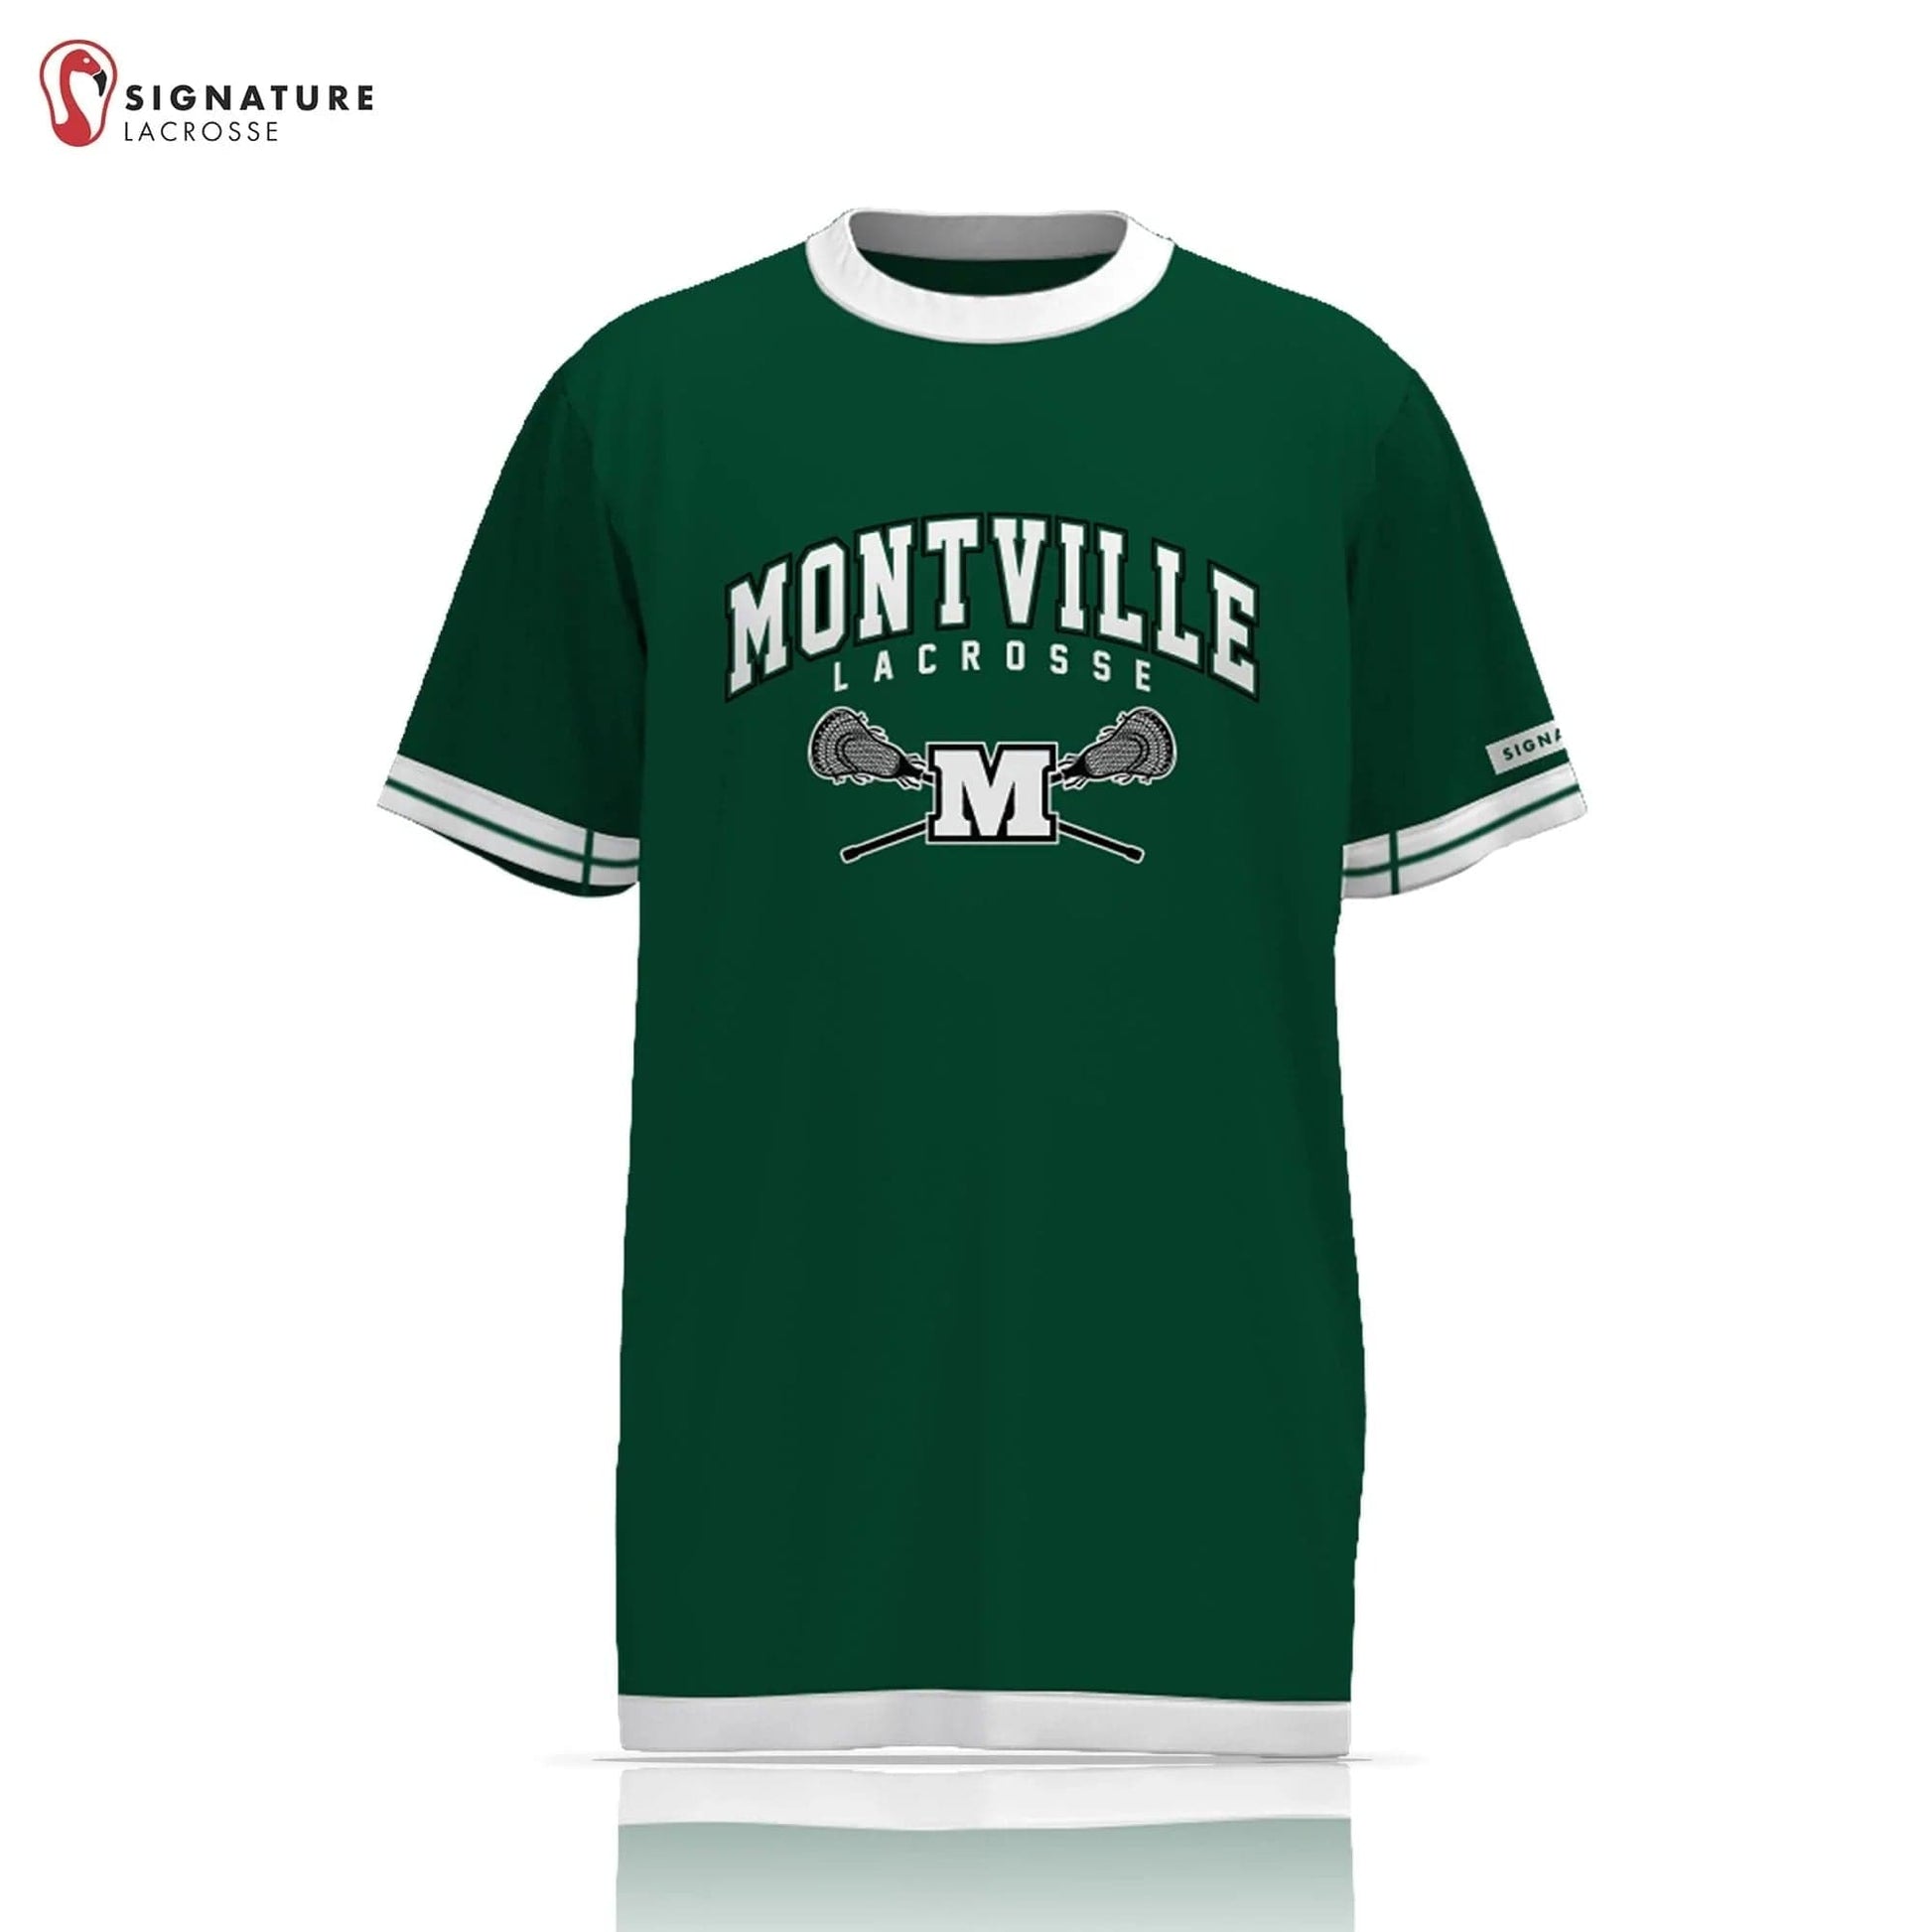 Montville Lacrosse Men's Game Short Sleeve Shooter Shirt: 5th Grade Signature Lacrosse